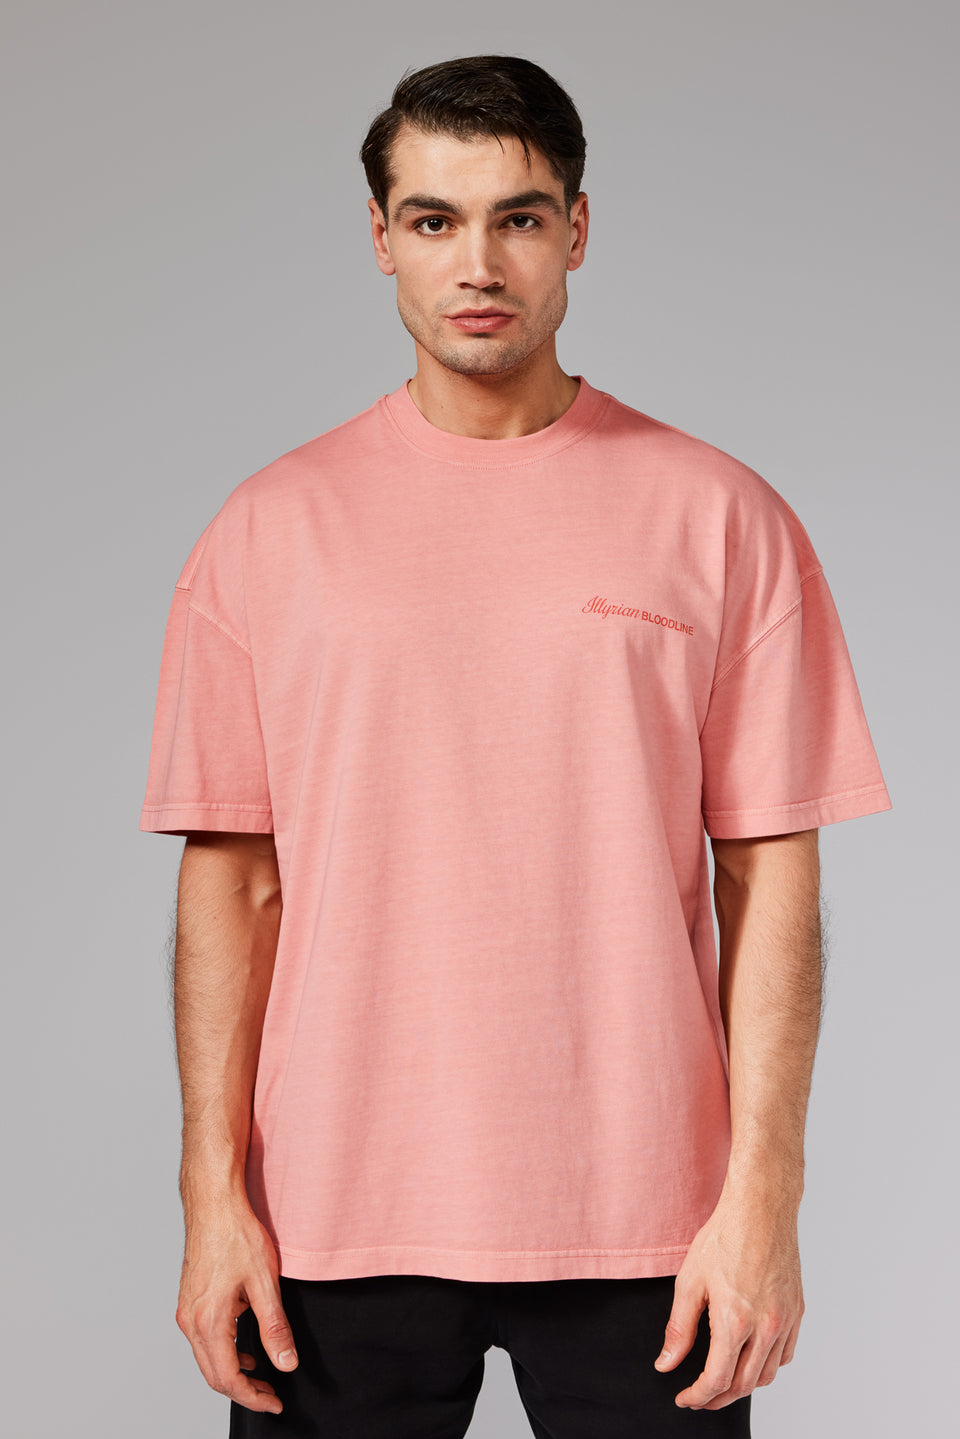 Illyrian Watermelon T-Shirt